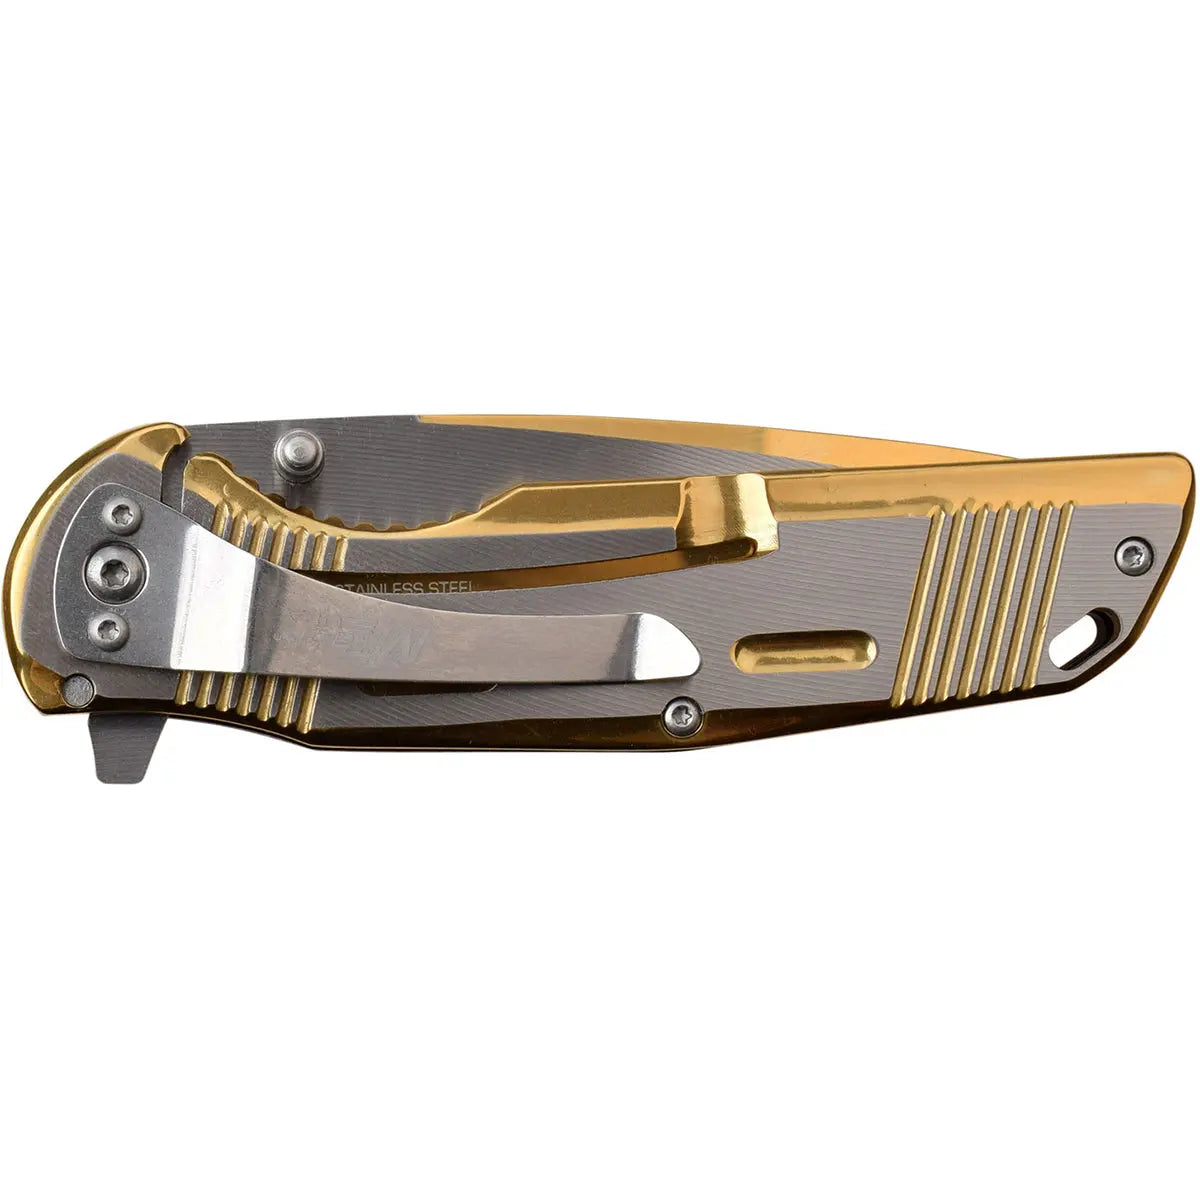 MTech USA Framelock Spring Assisted Folding Knife, Gold/Satin Blade, MT-A1019GD M-Tech